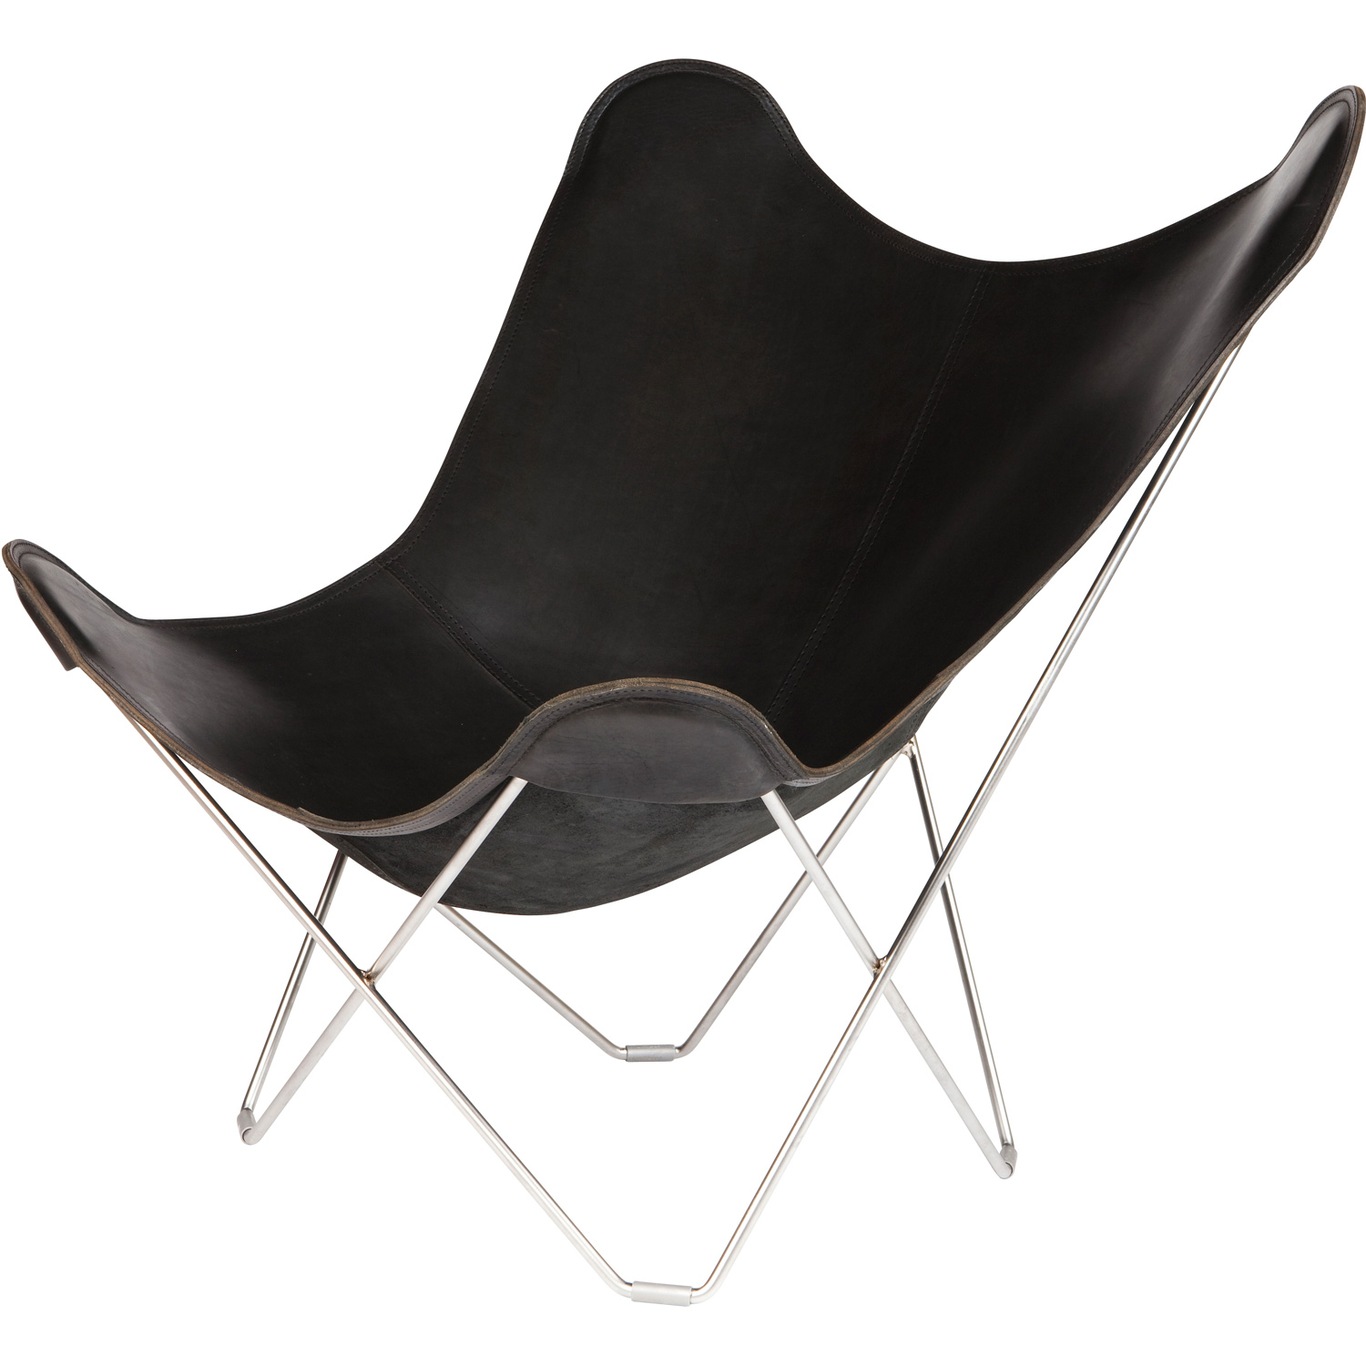 Pampa Mariposa Butterfly Chair, Black/Chrome